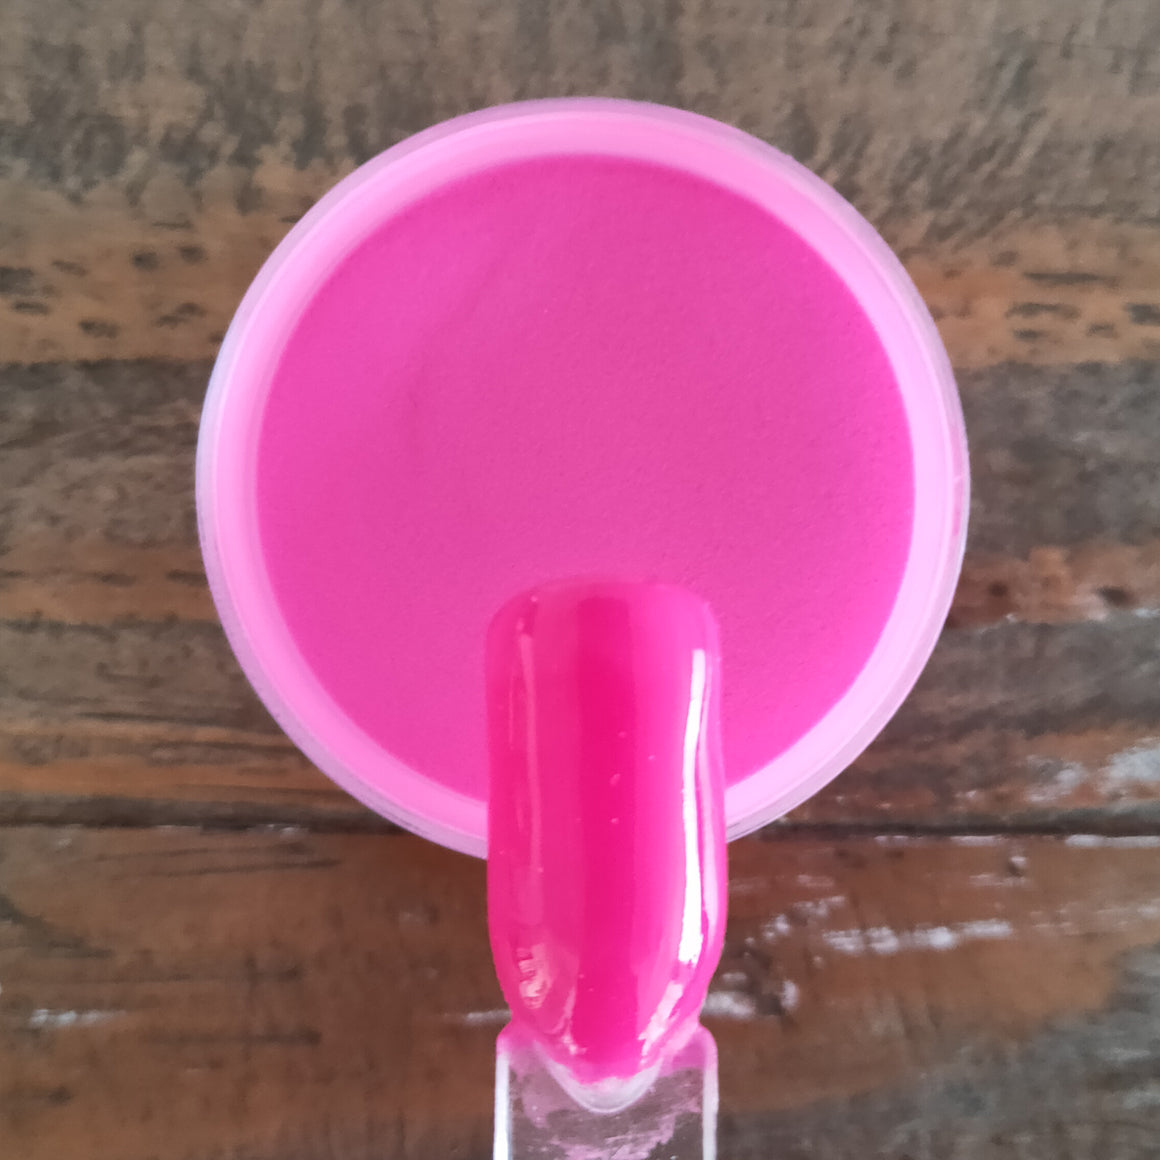 Pot of hot pink Bend and Snap dip powder